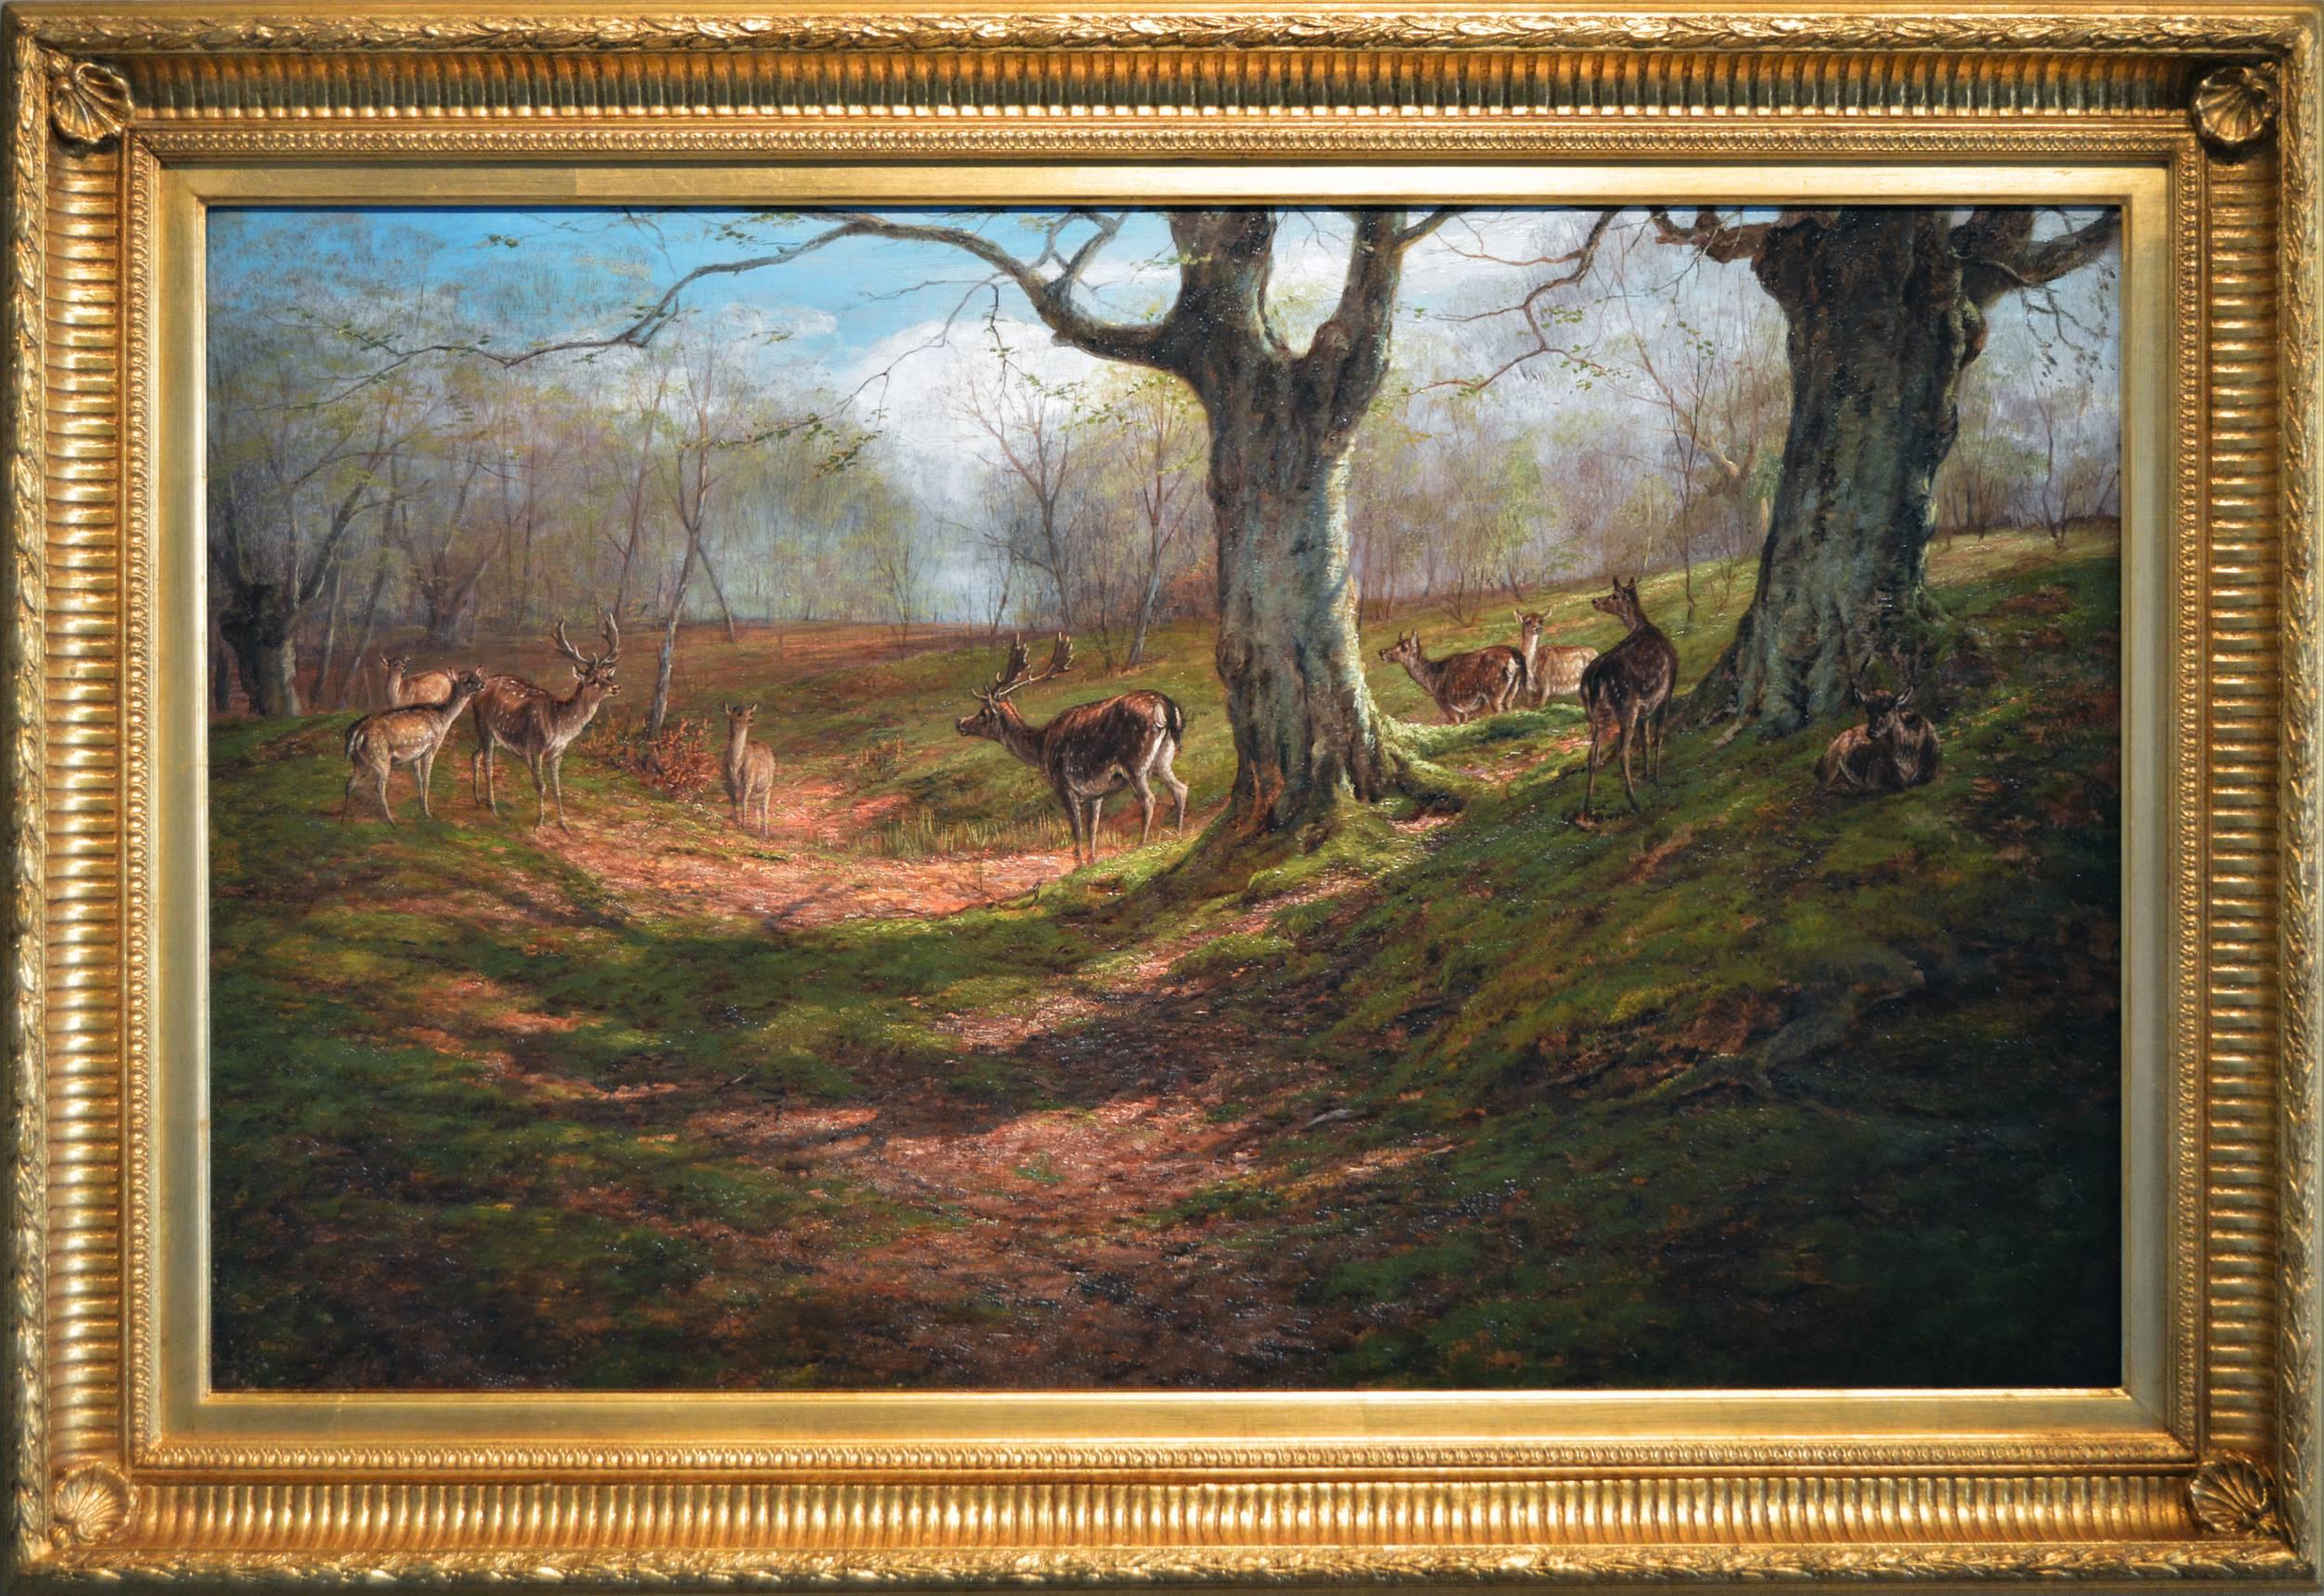 William Luker Sr. Landscape Painting - Deer in Park, oil on canvas